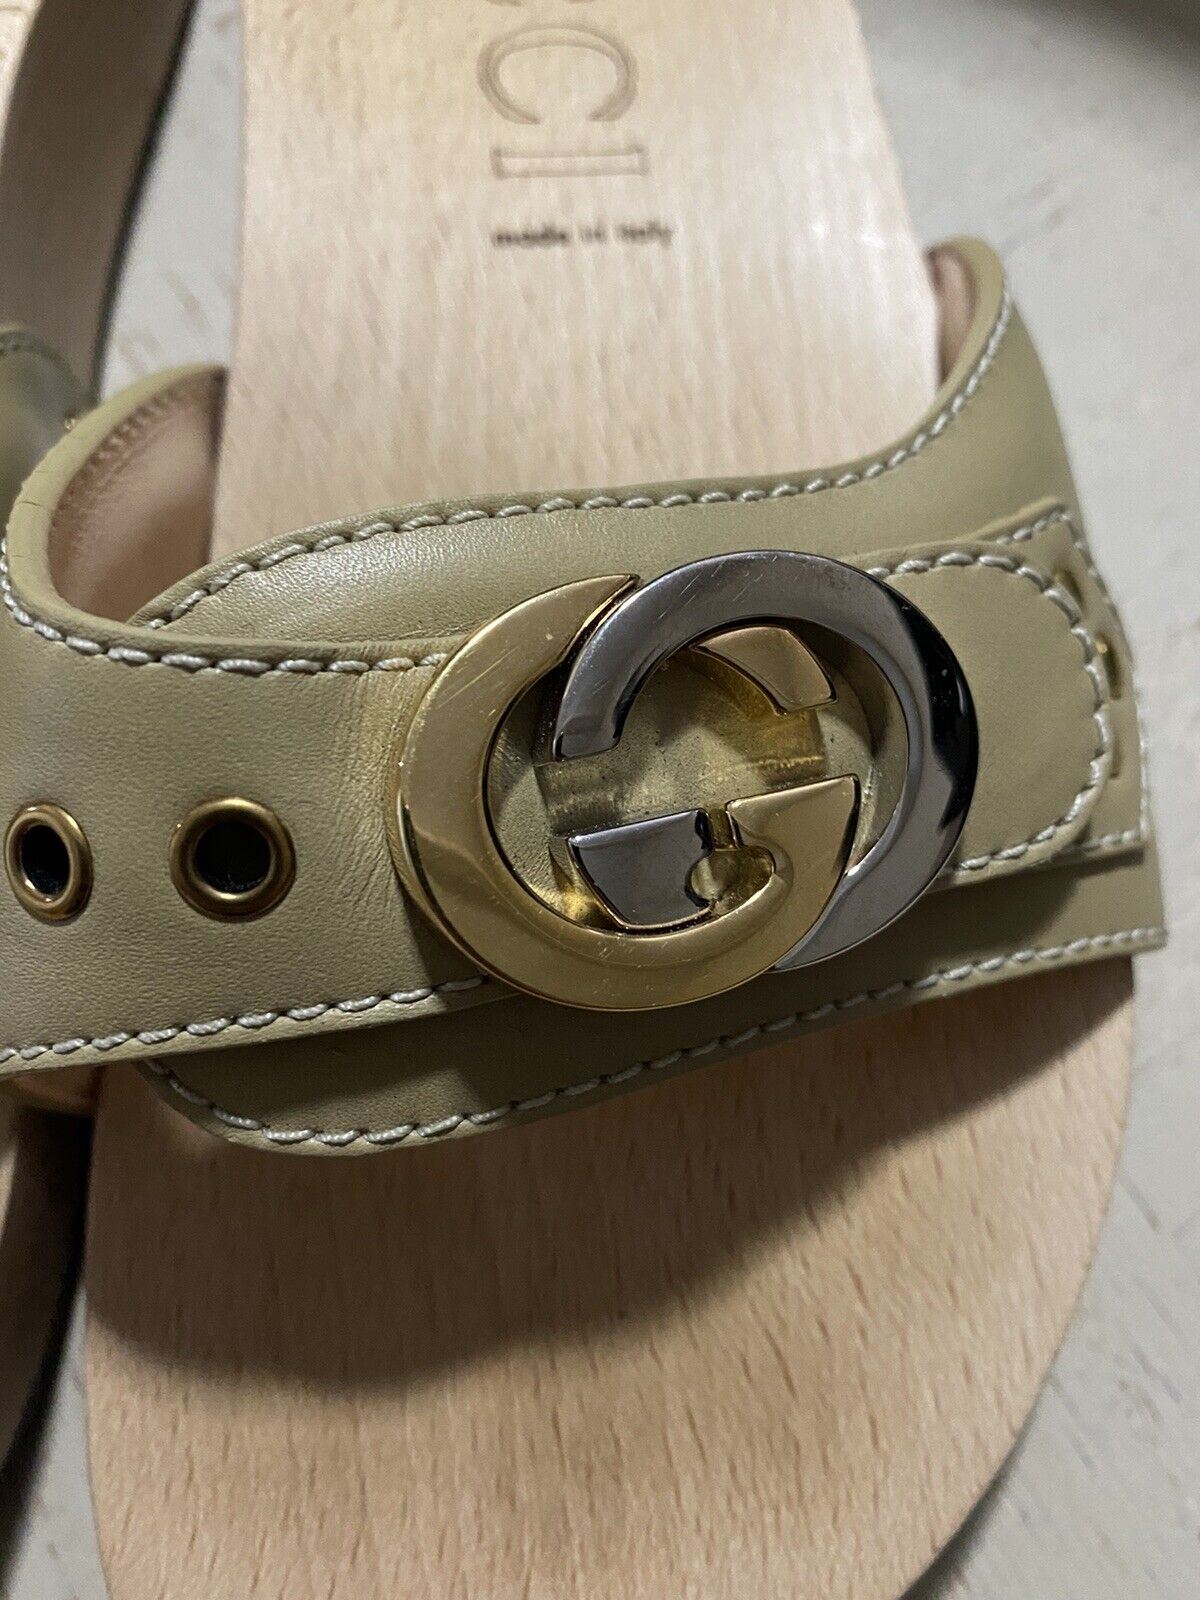 Gucci Women’s Sandal Wood/Leather Shoes Beige 9 US ( 39 Eu ) Italy